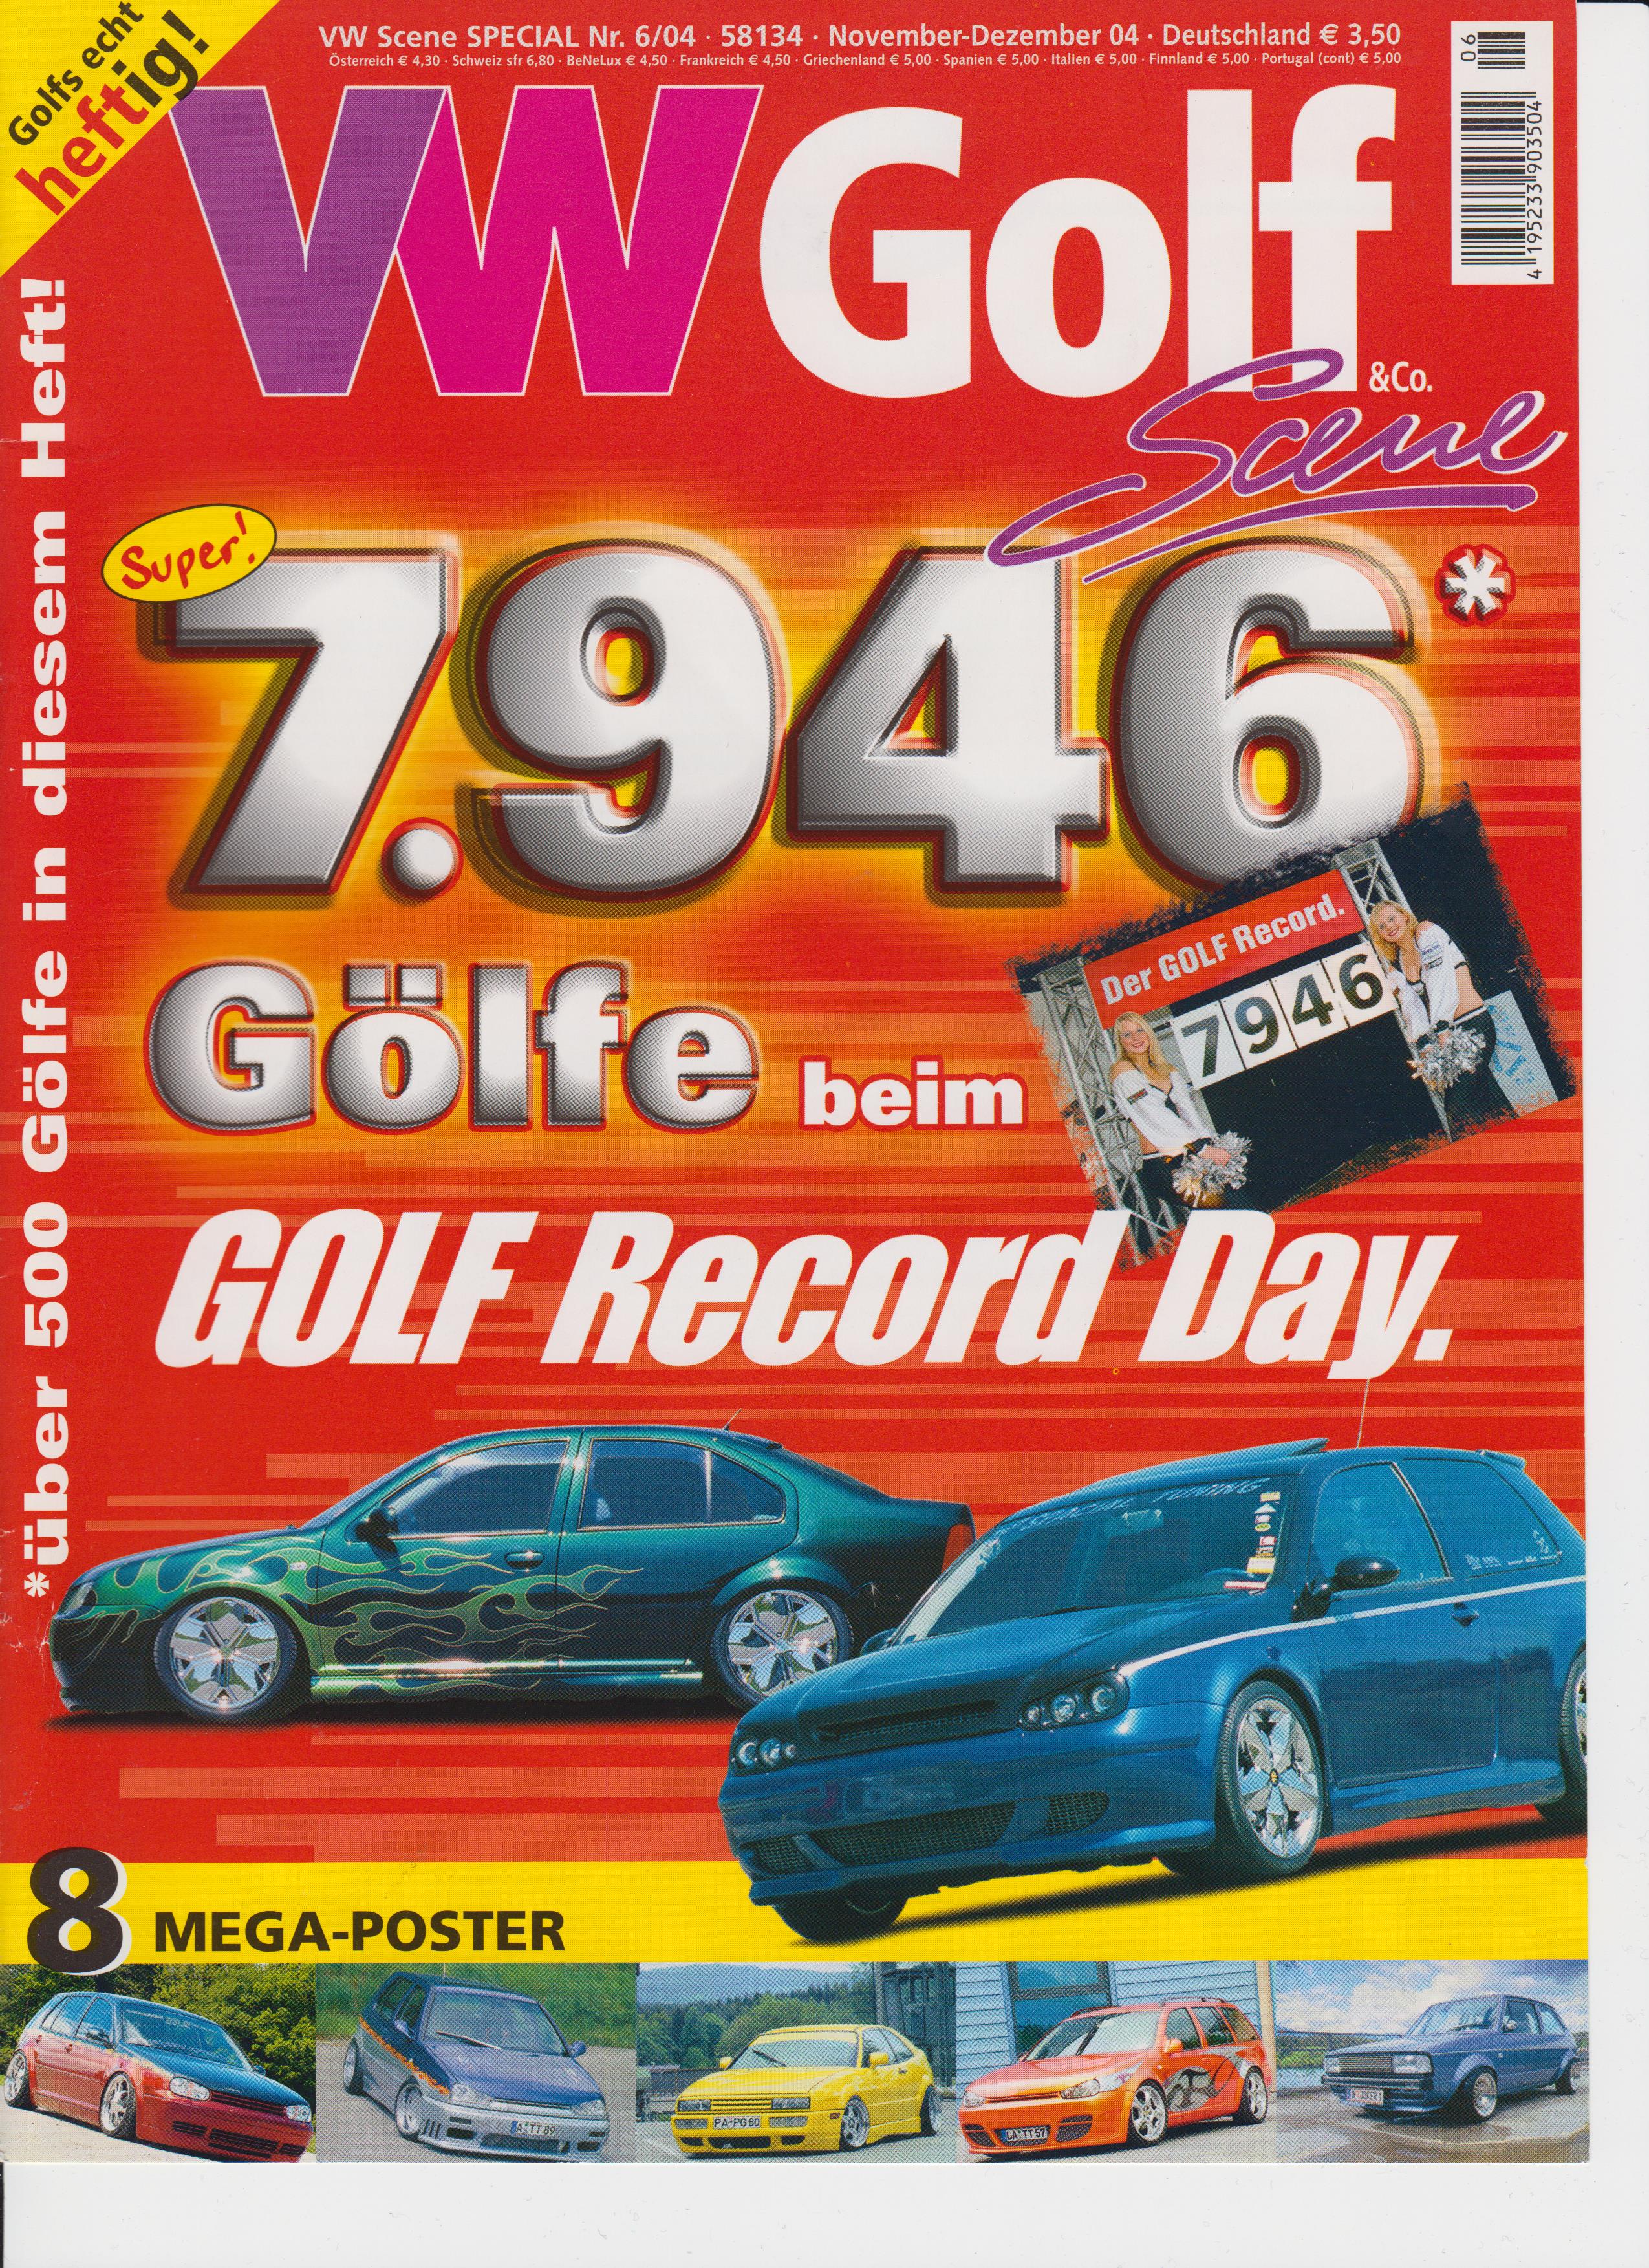 Journal professionnel VW Golf 06 2004